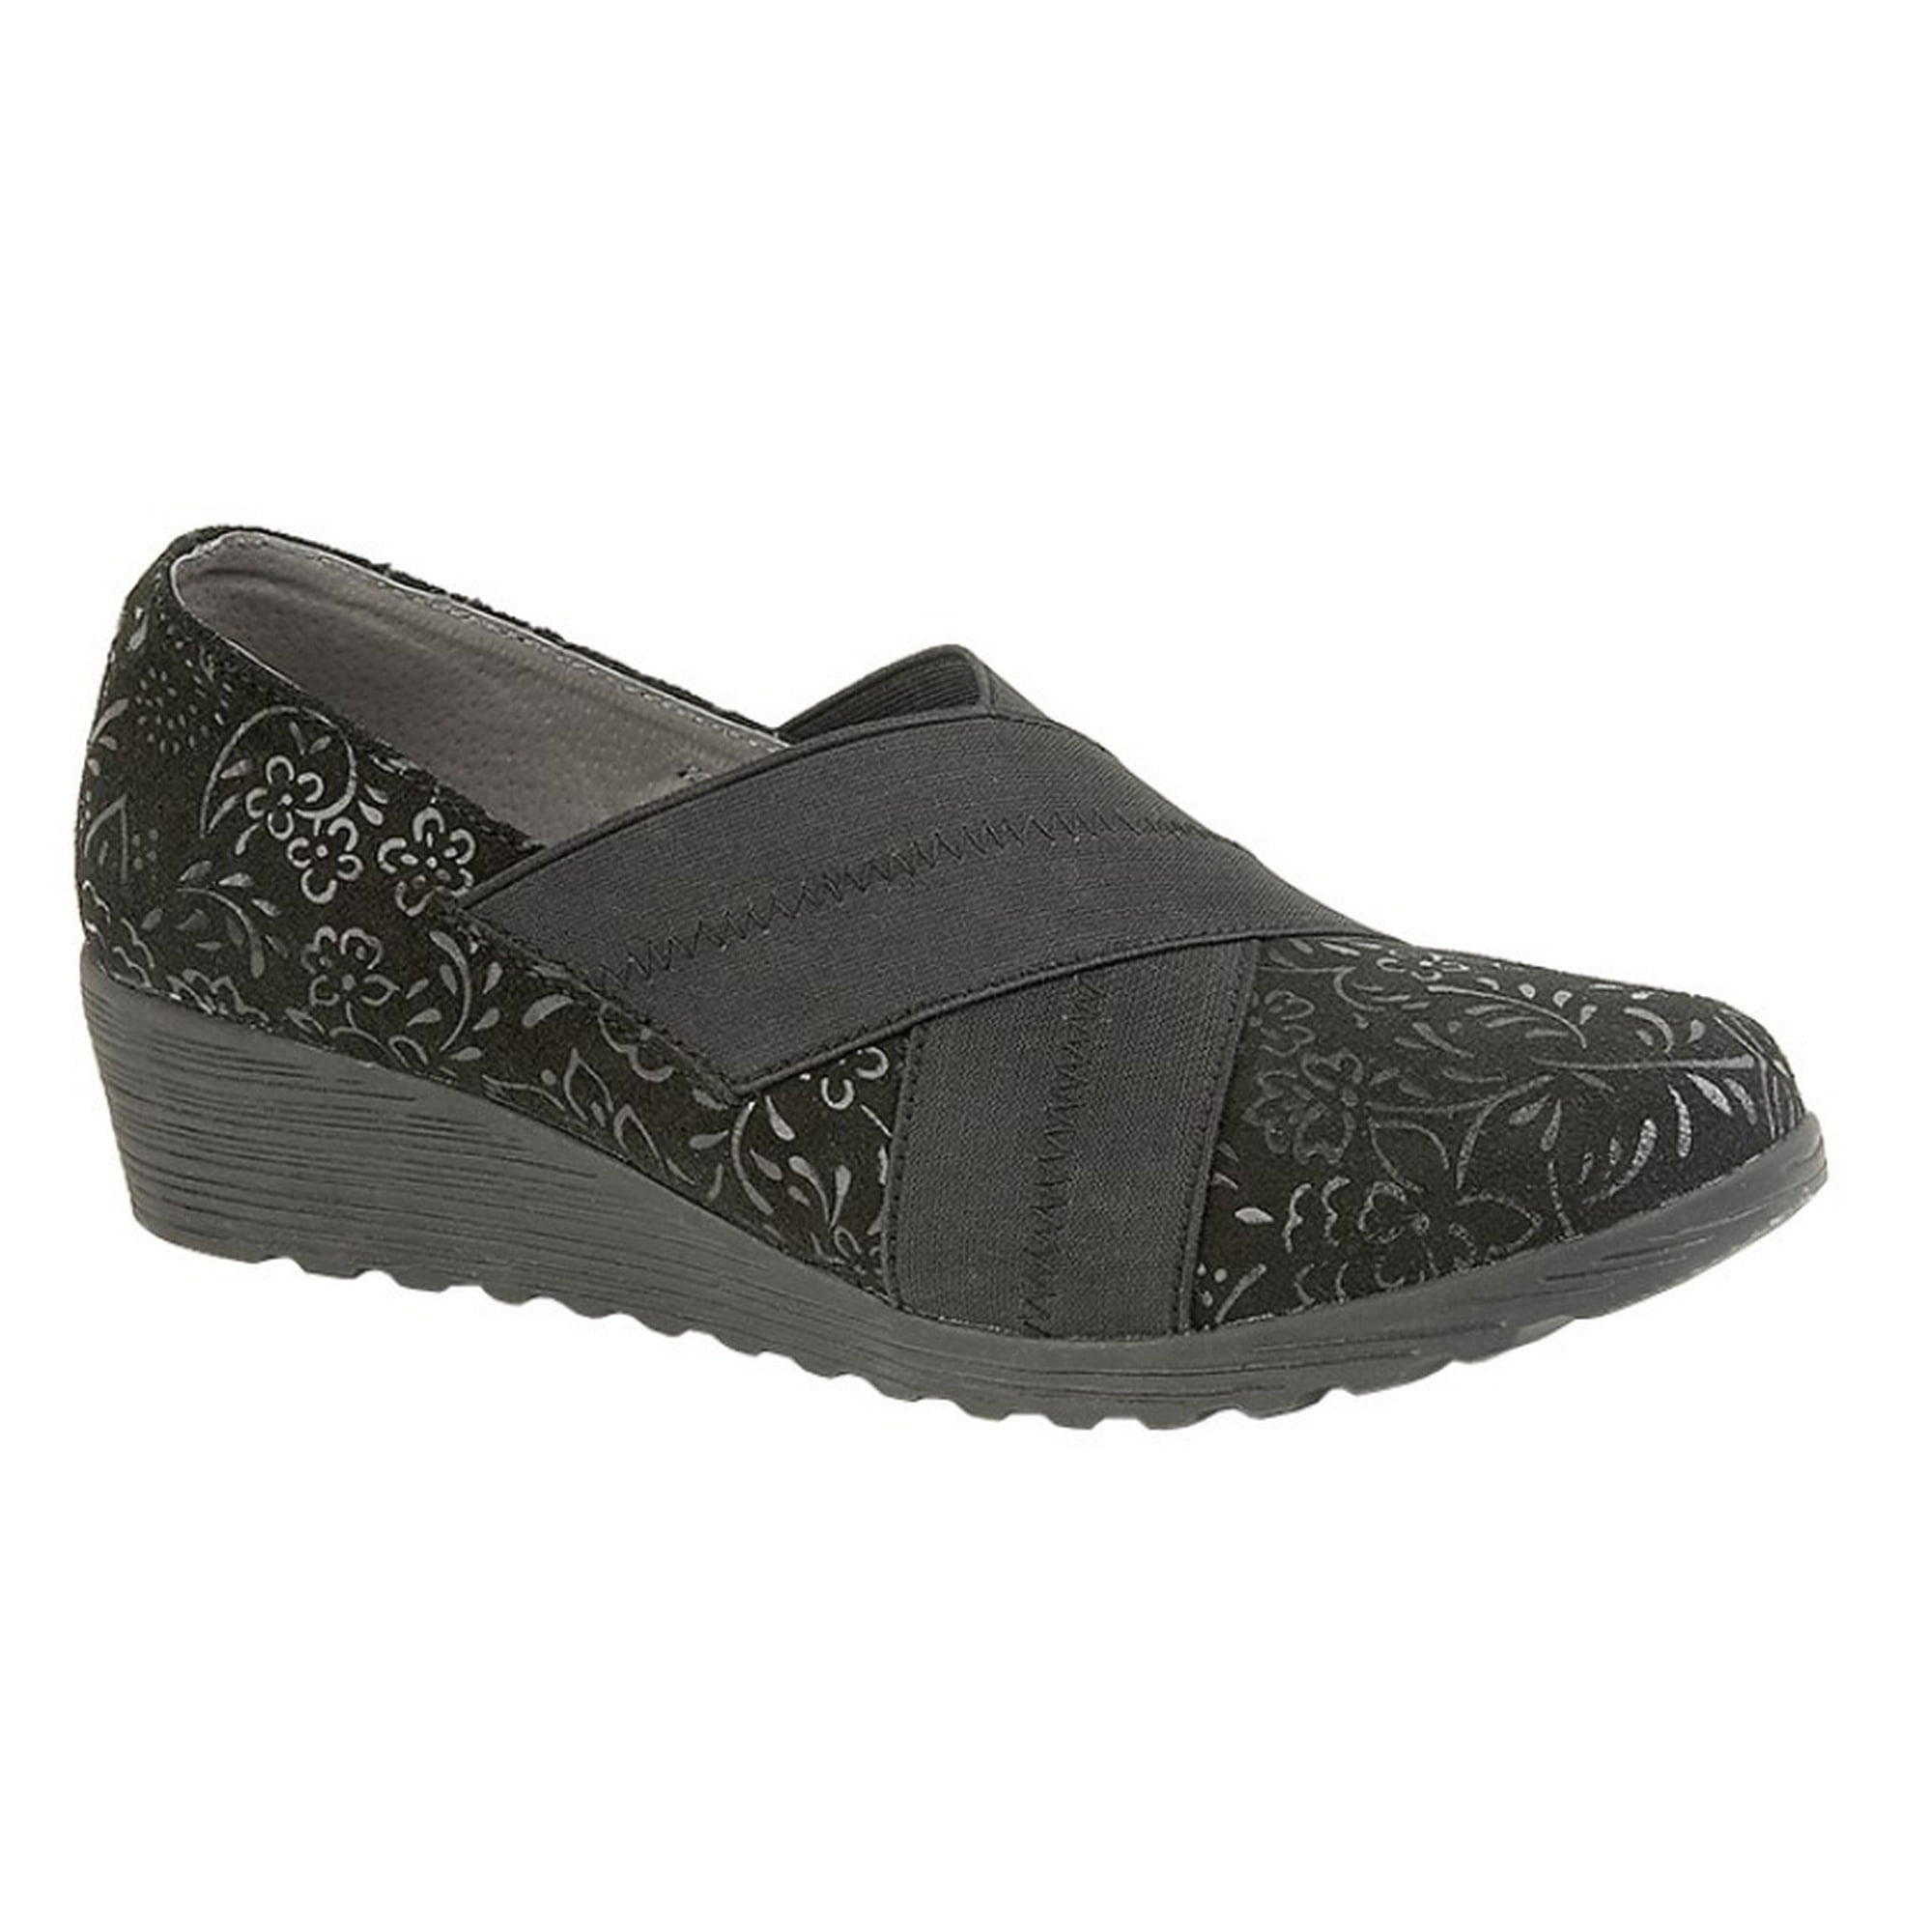 Ladies Boulevard L828 Black Suede Crossover Elastic Fit Casual Shoes 